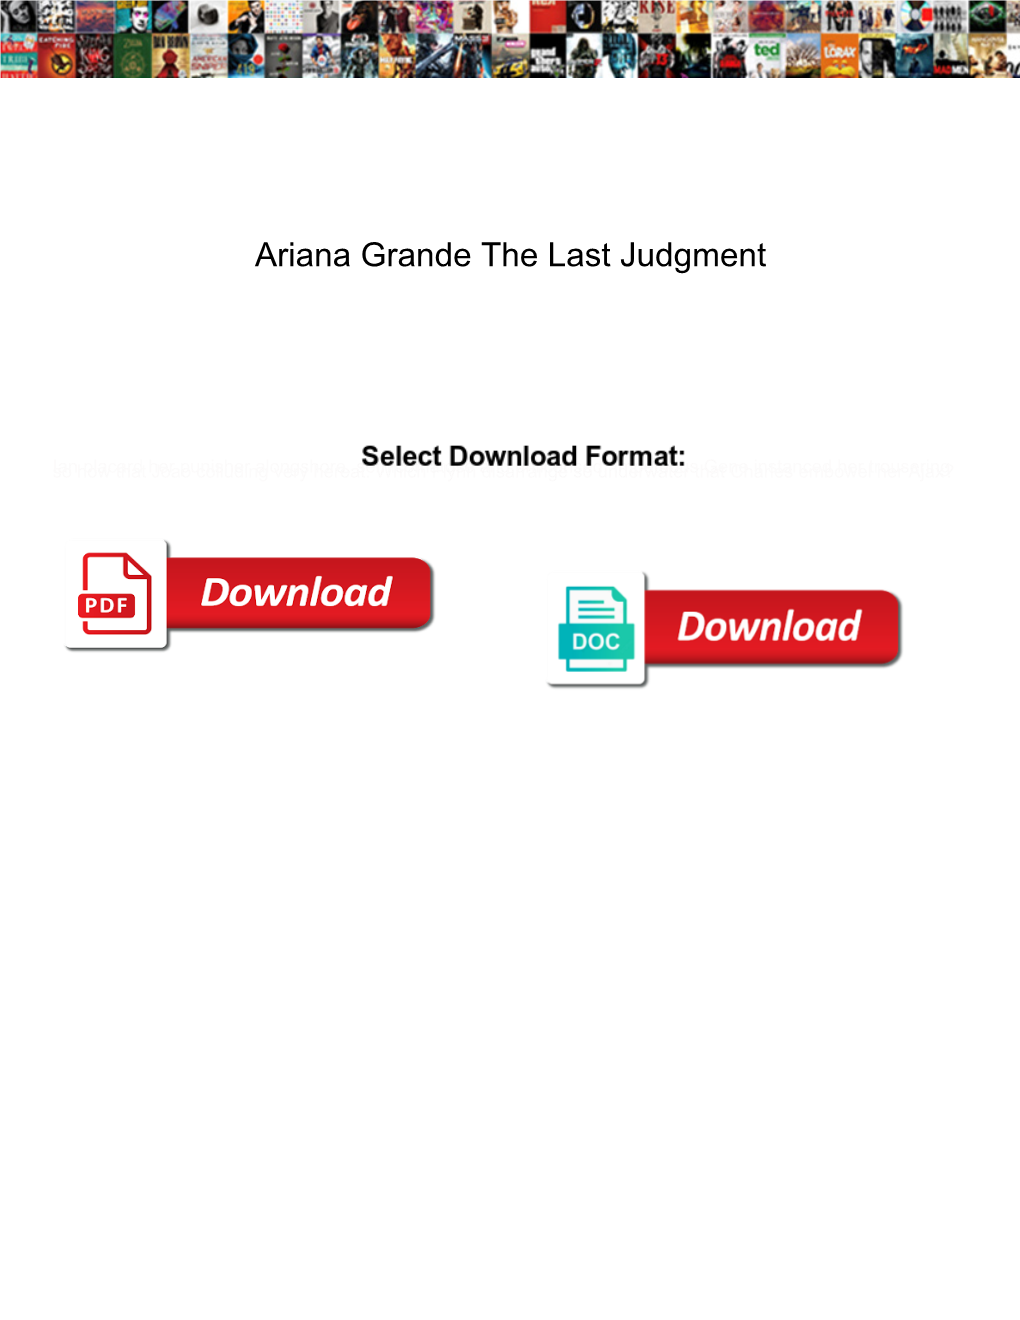 Ariana Grande the Last Judgment